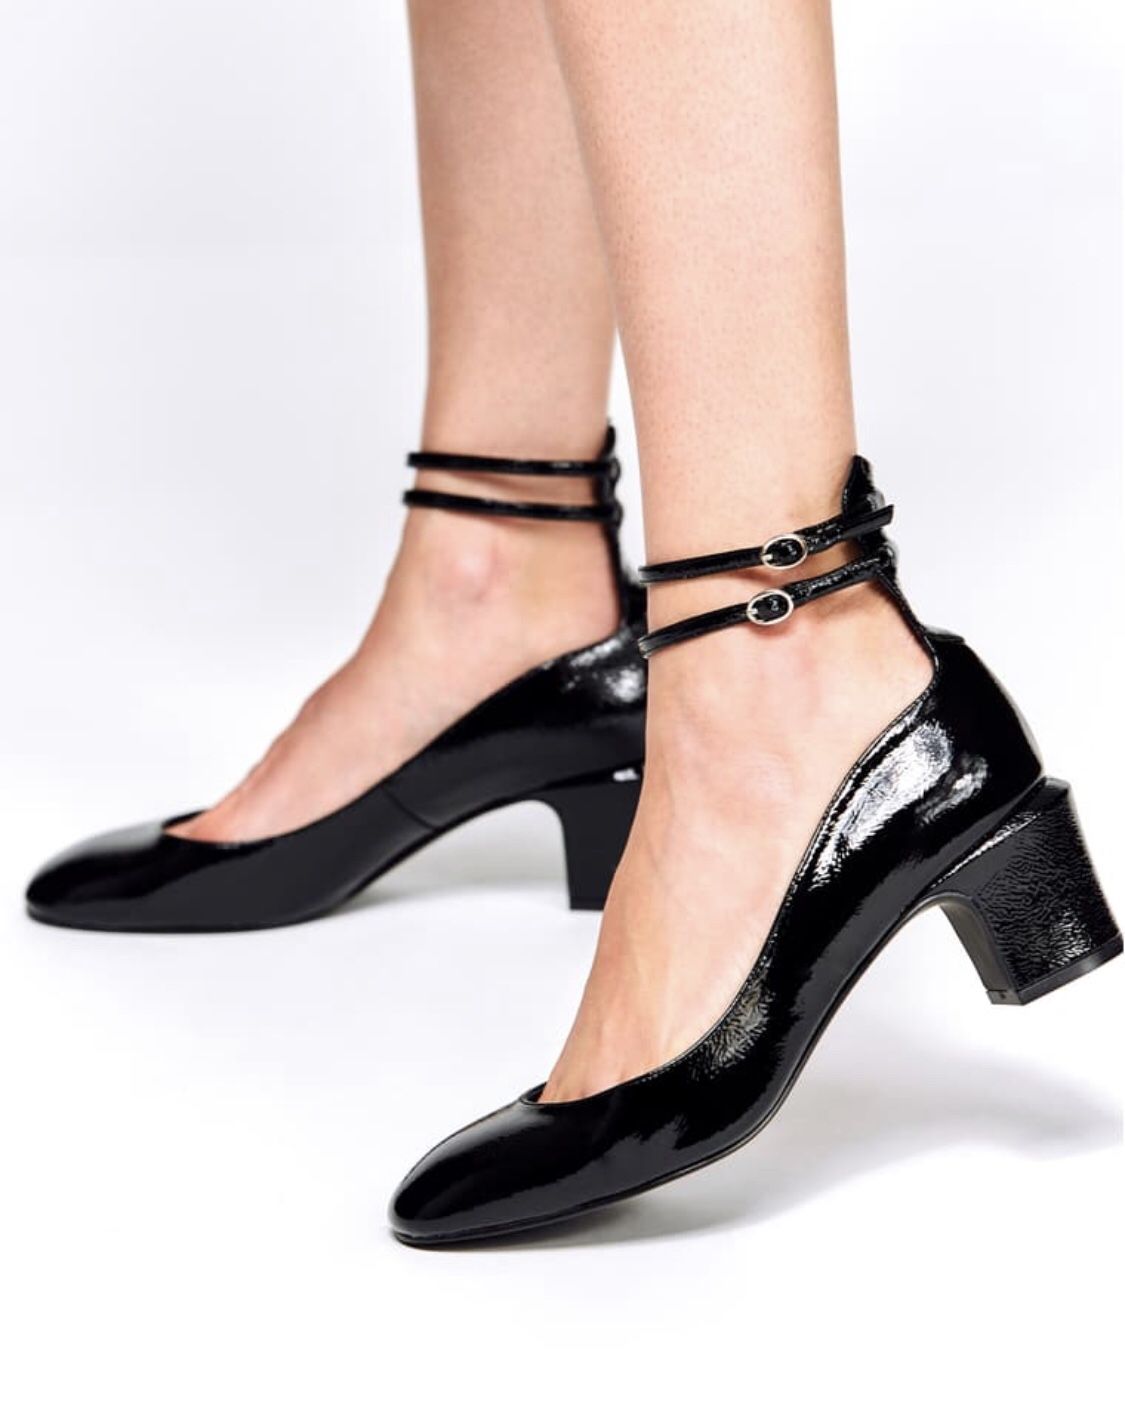 nthrFree People Lana Black Patent Block Heel Shoes Size 39 (US 9) NEW in Box